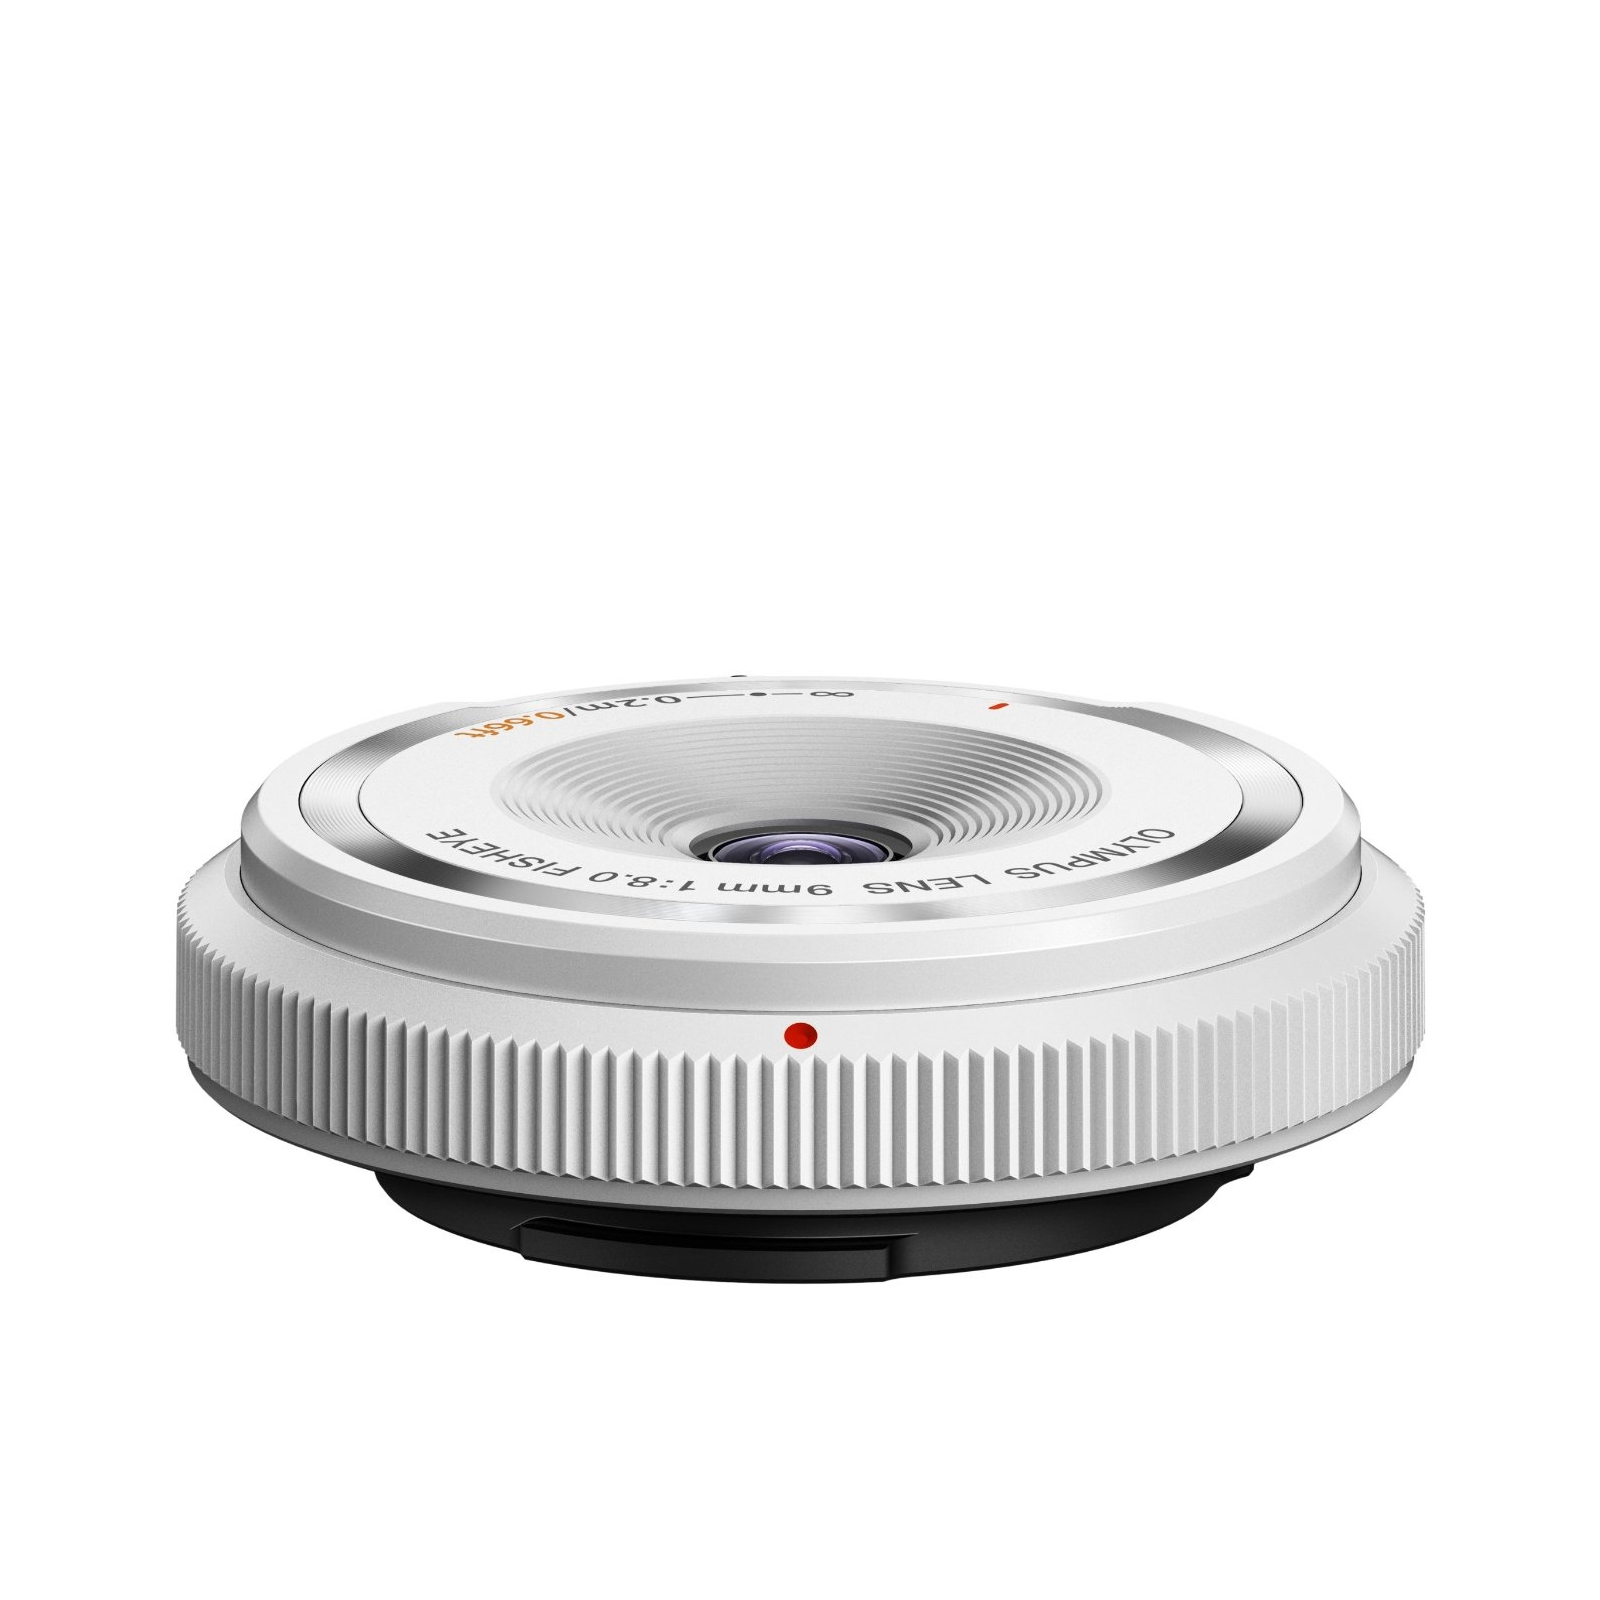 Объектив Olympus BCL-0980 Fish-Eye Body Cap Lens 9mm 1:8.0 White (V325040WW000) изображение 3